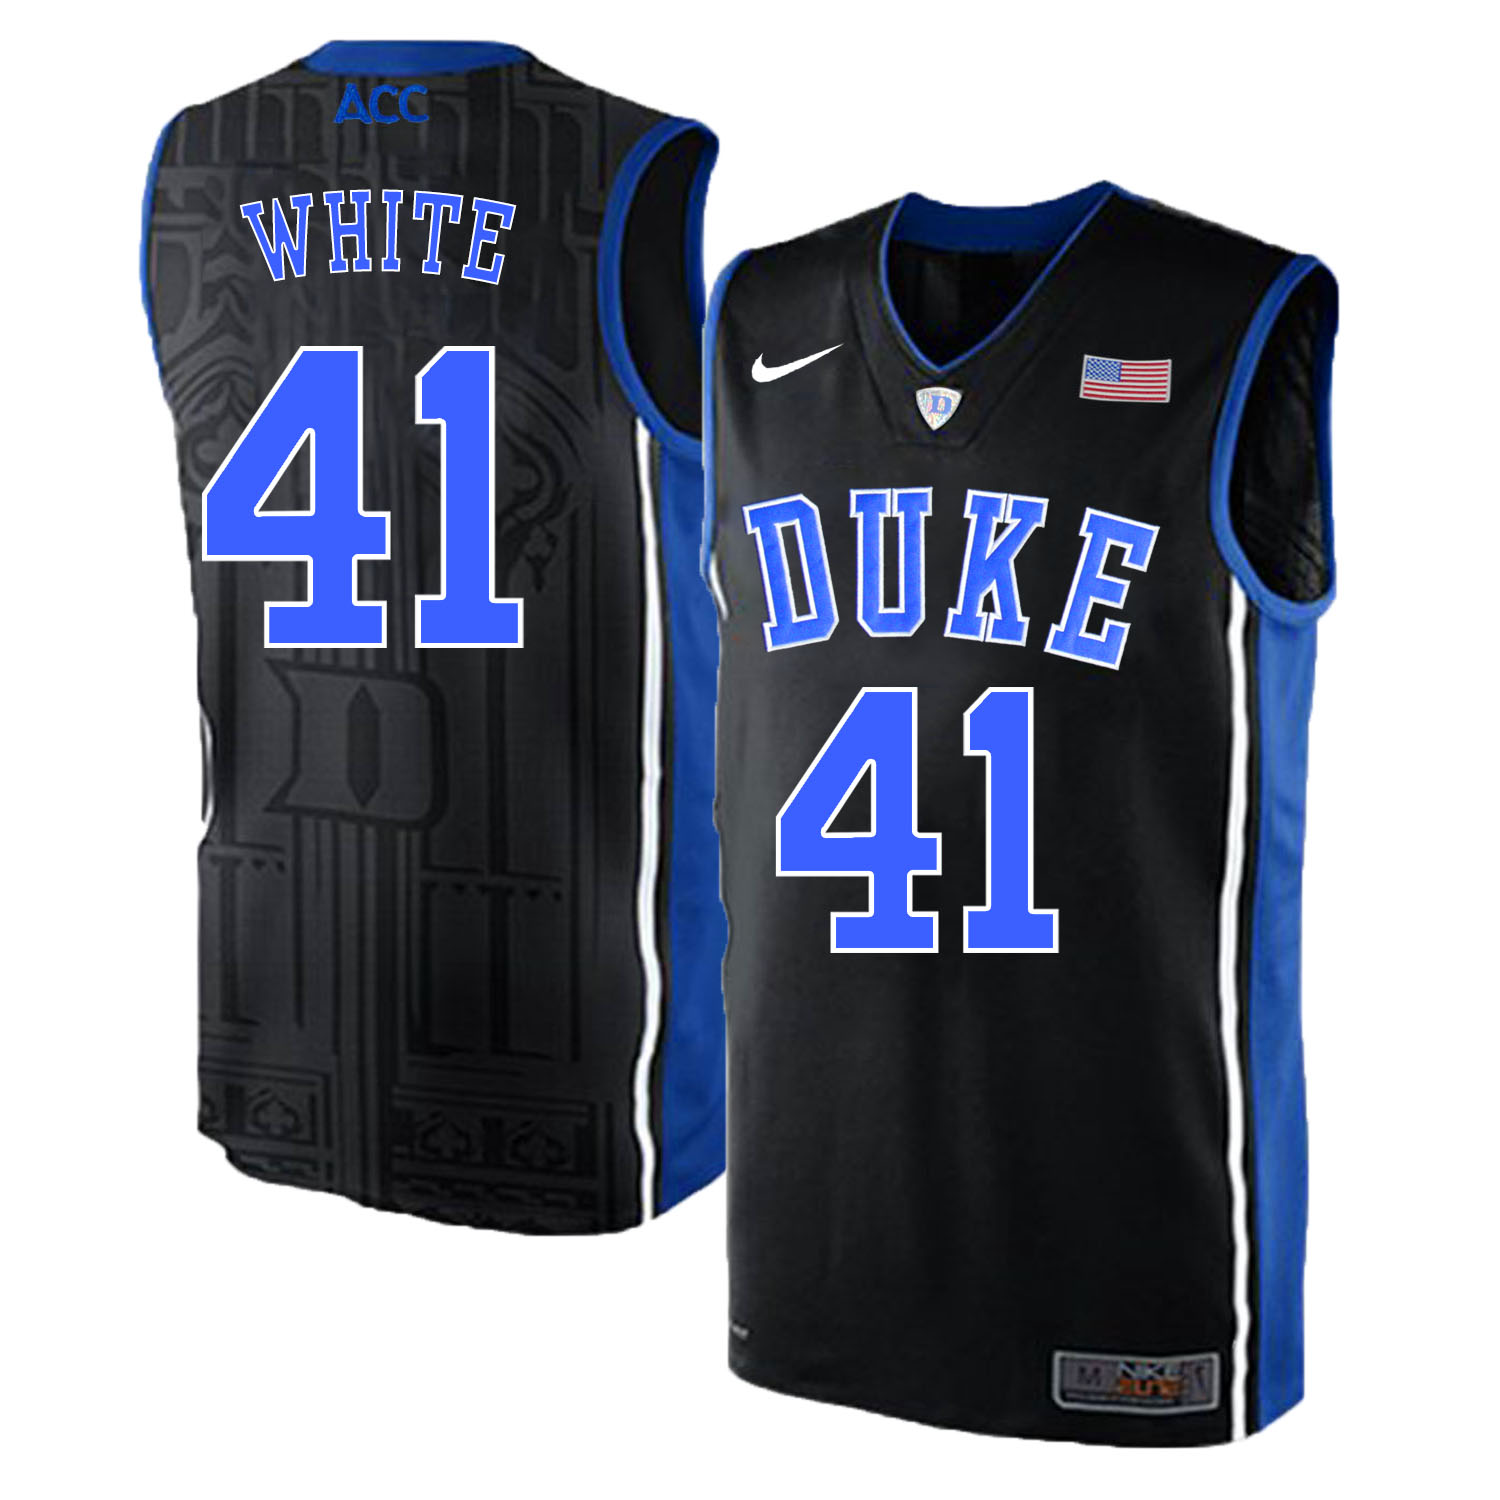 Duke Blue Devils 41 Jack White Black Elite Nike College Basketball Jersey